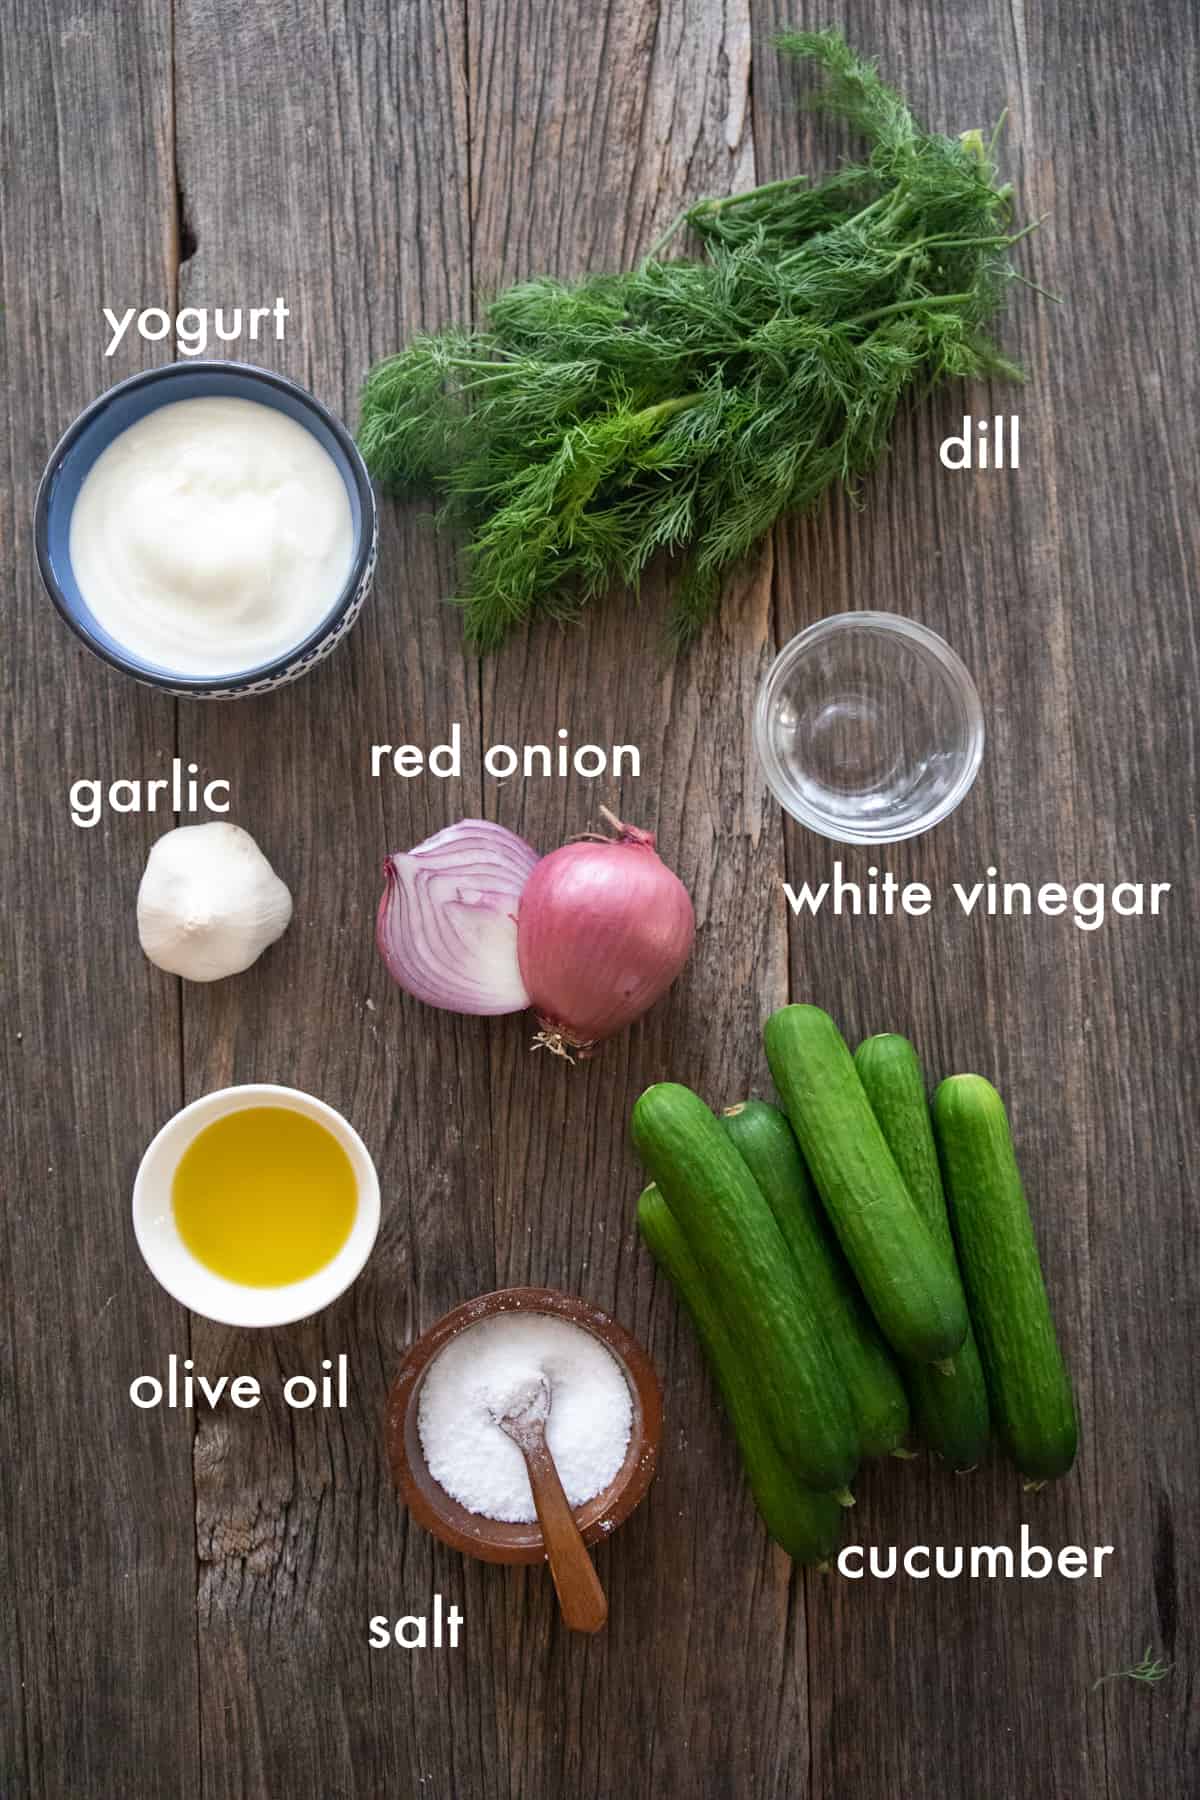 Ingredients to make Turkish creamy cucumber salad are cucumber, red onion, yogurt, dill, garlic, olive oil, mint and vinegar. 